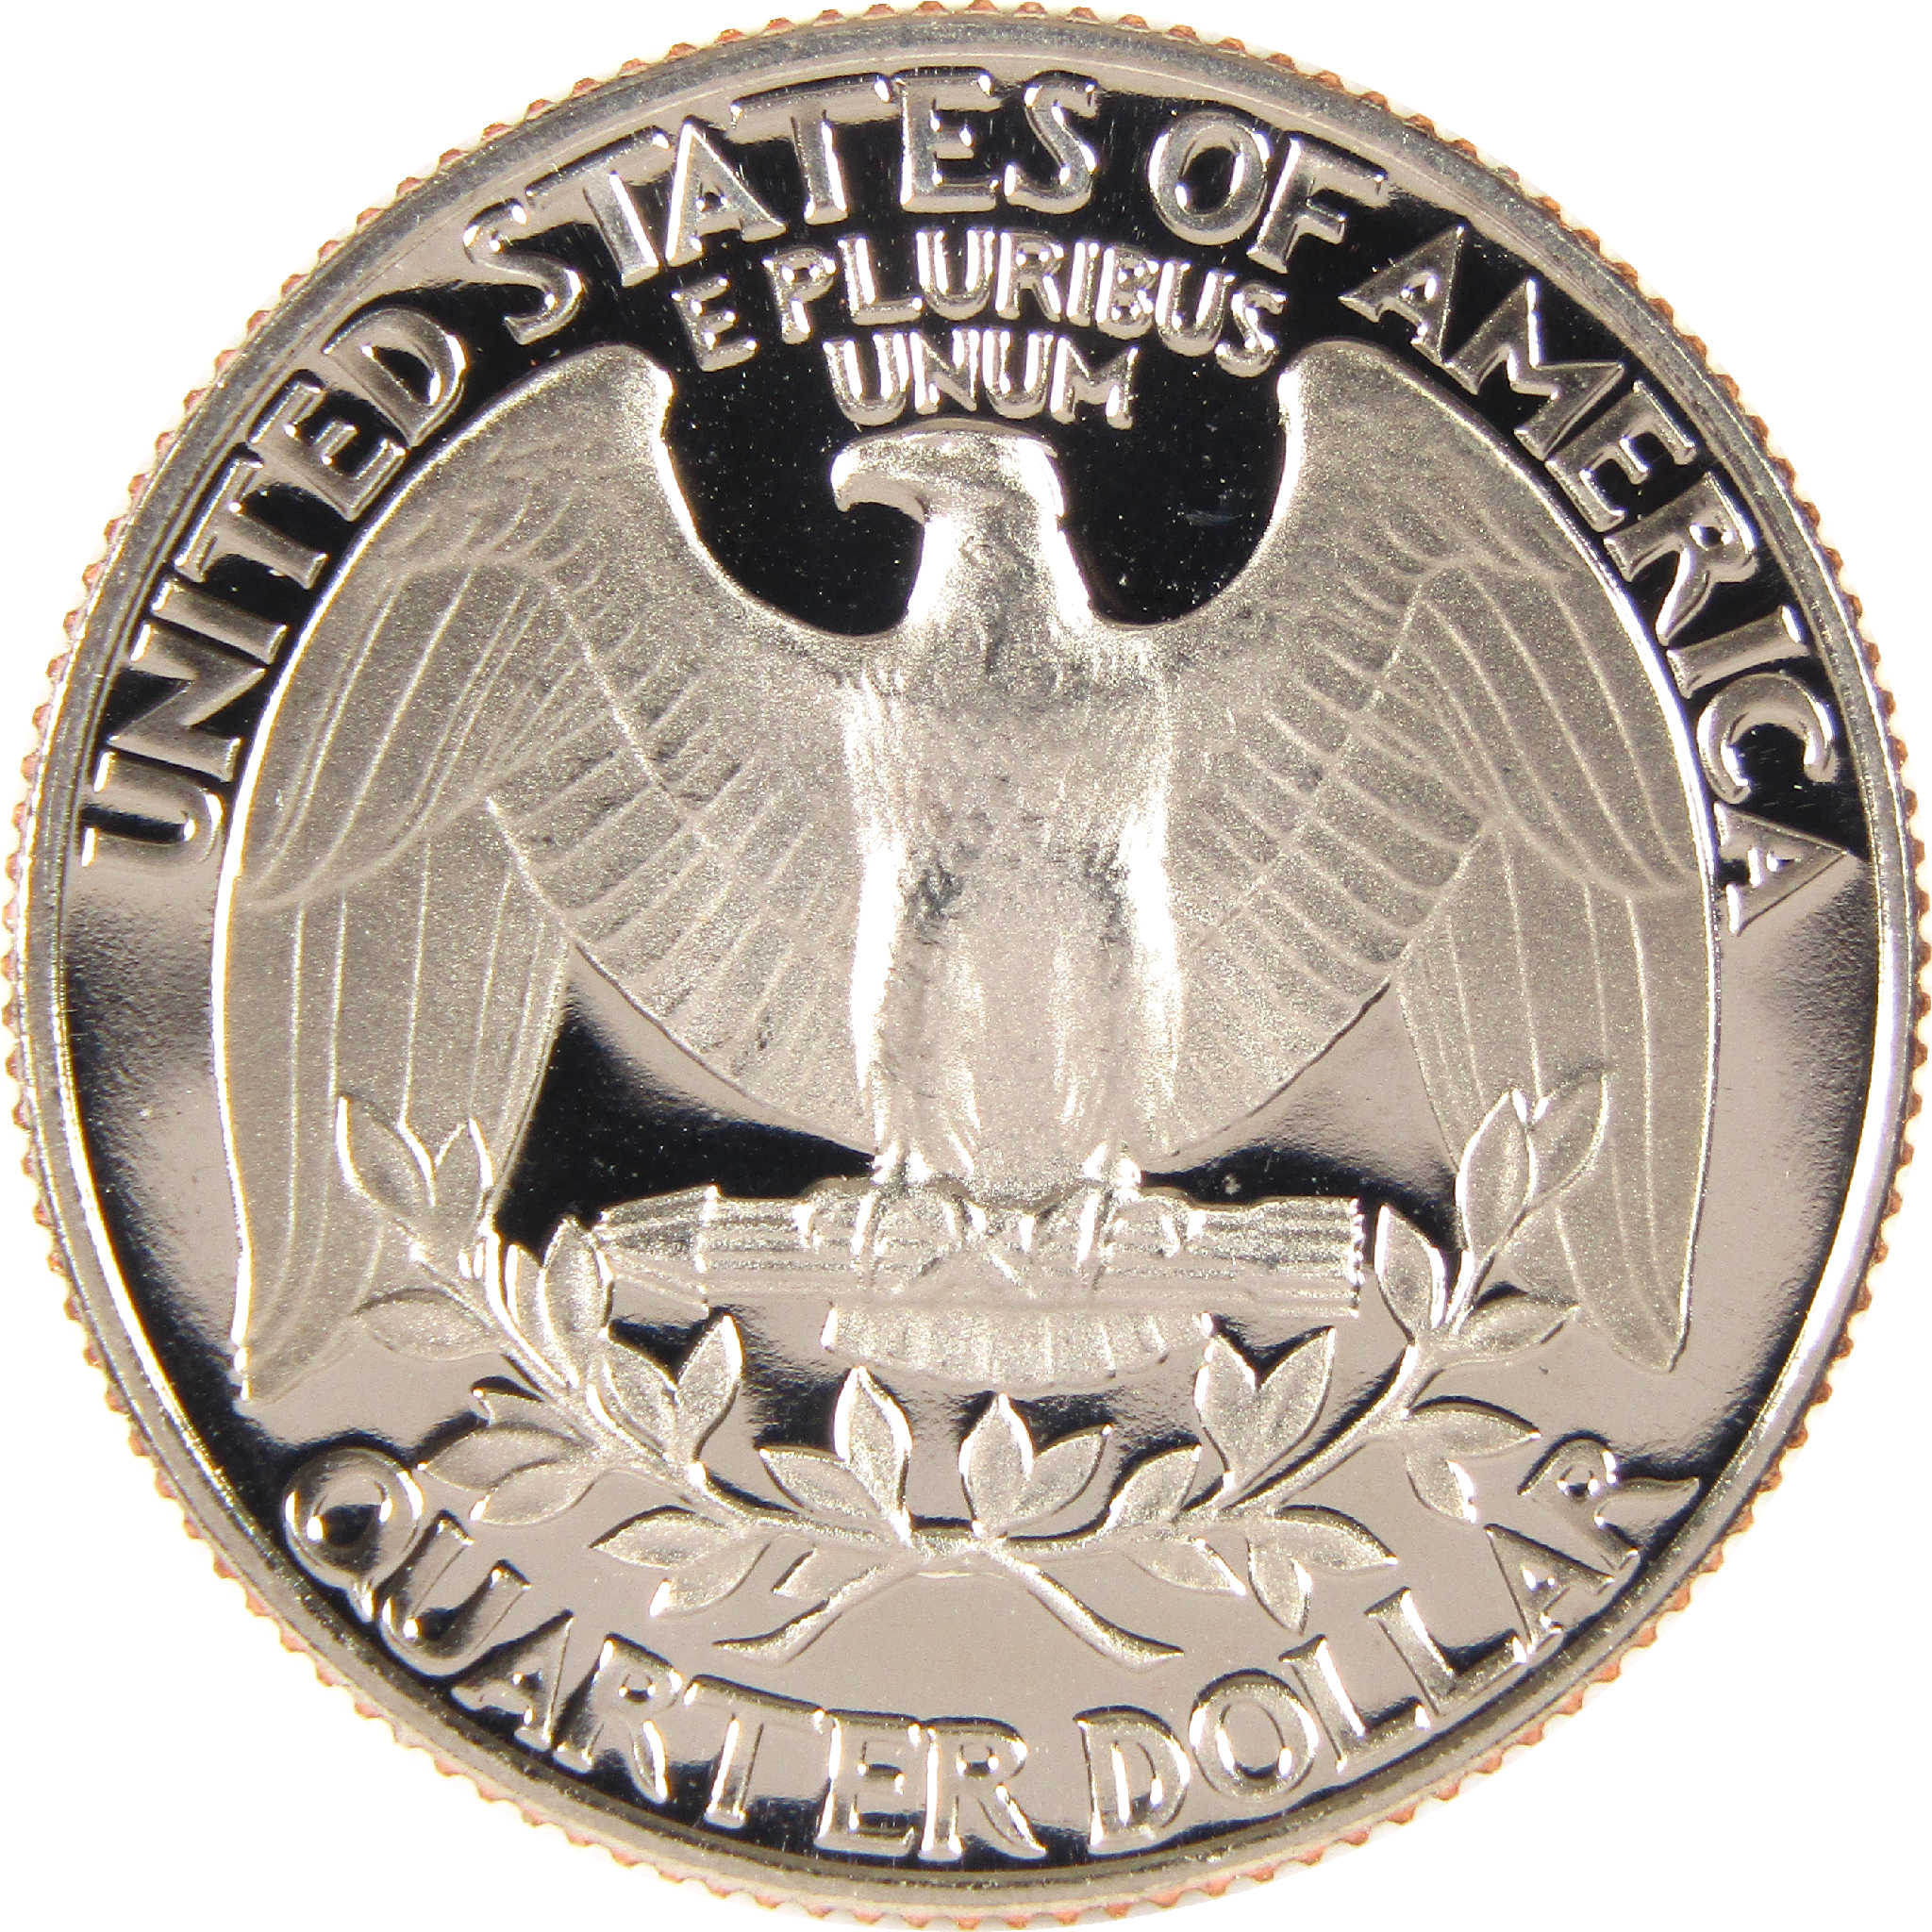 1991 S Washington Quarter Clad 25c Proof Coin